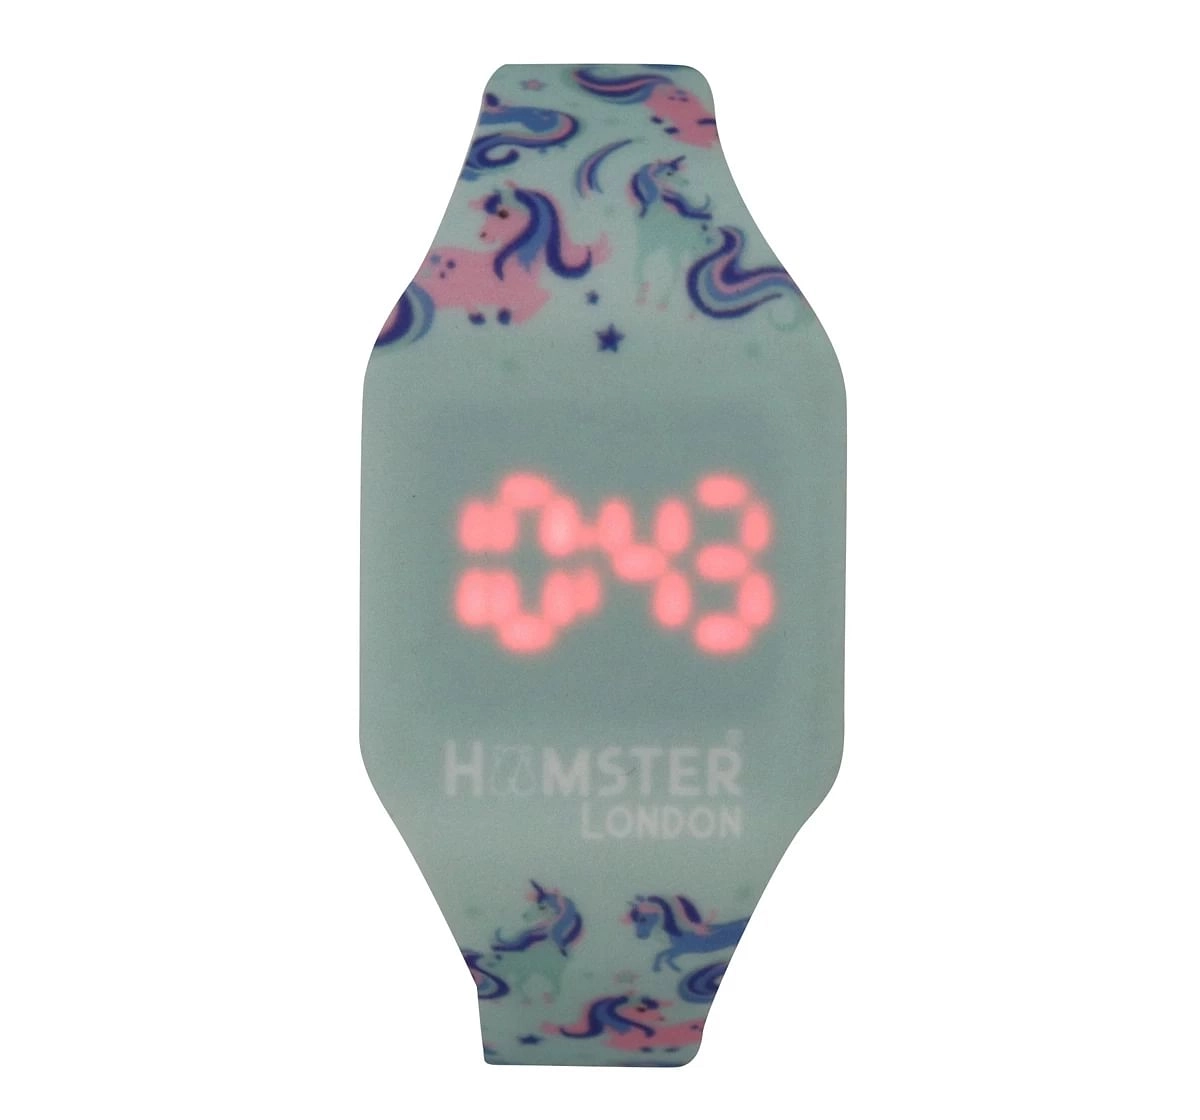 Hamster London Digital Digital Watch, For Kids, Unicorn Blue, 3Y+